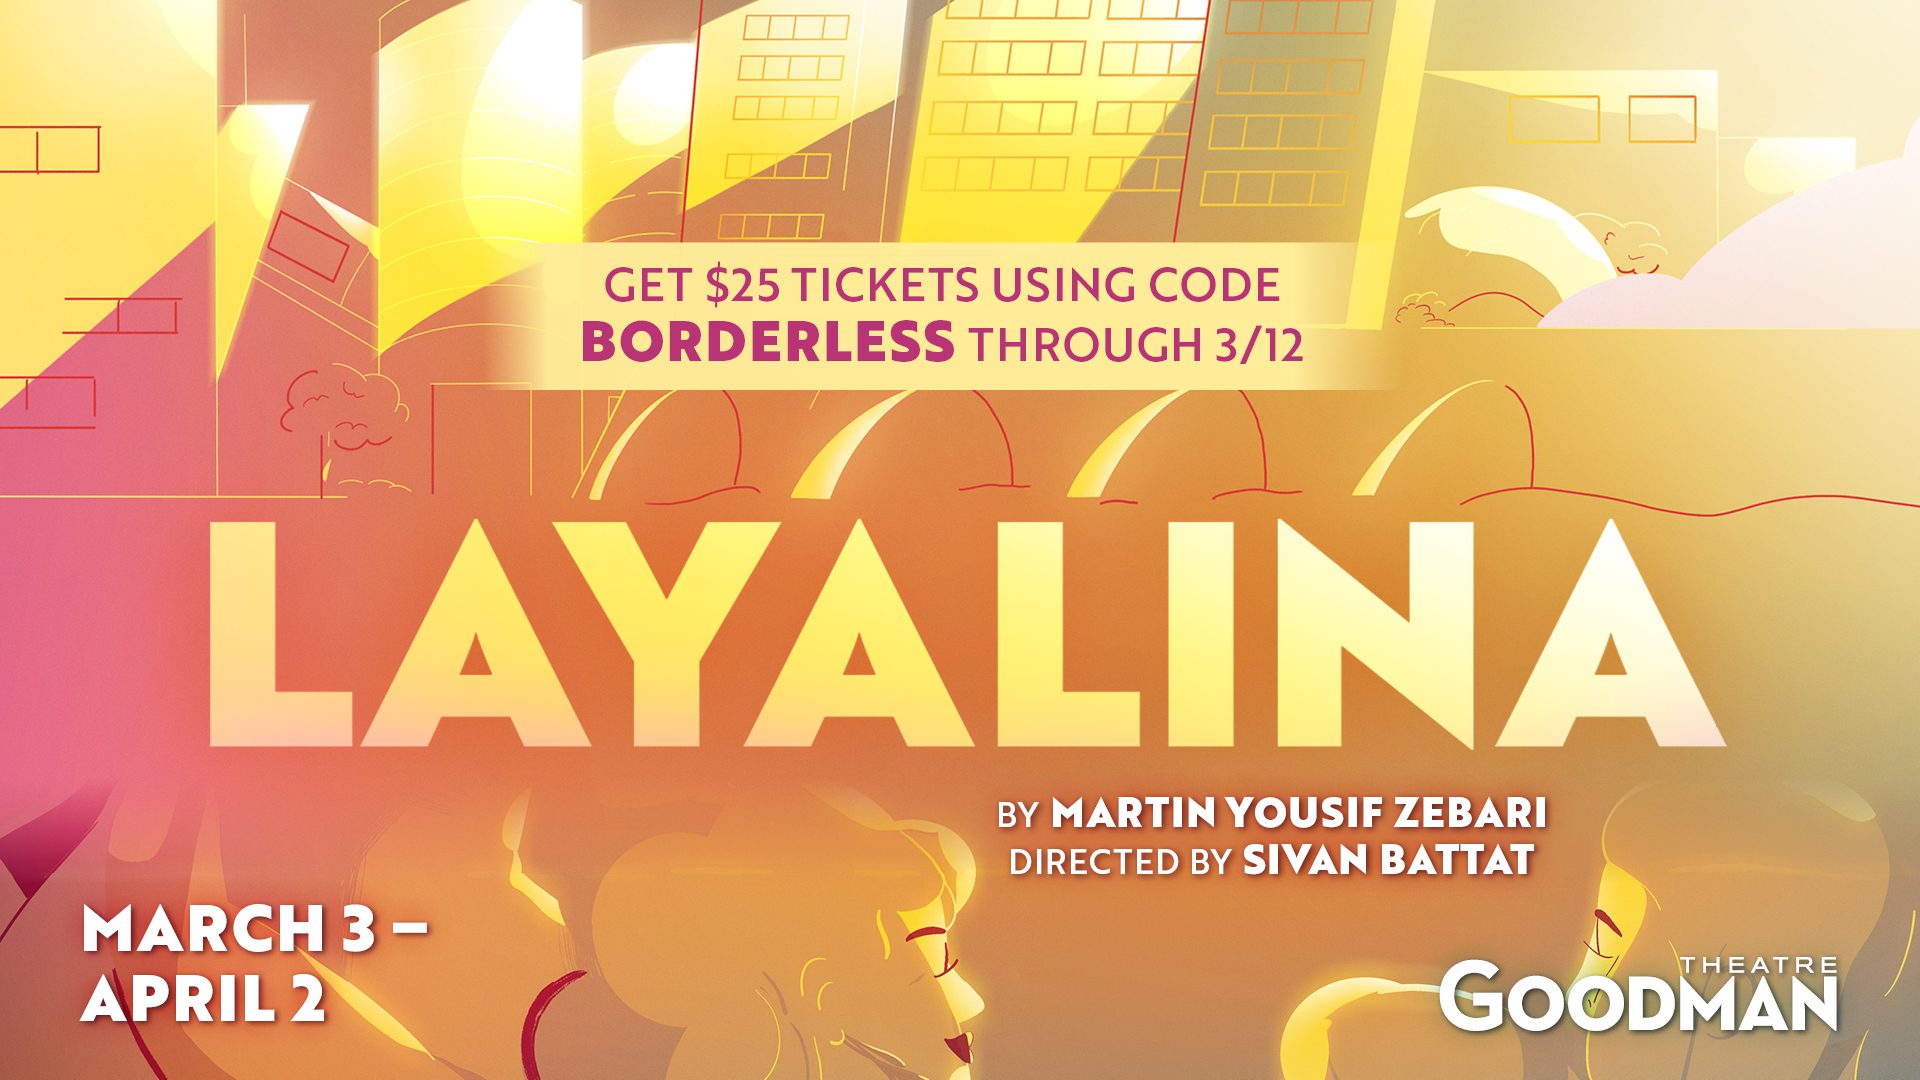 "Layalina" "Get $25 tickets using code Borderless though 3/12"